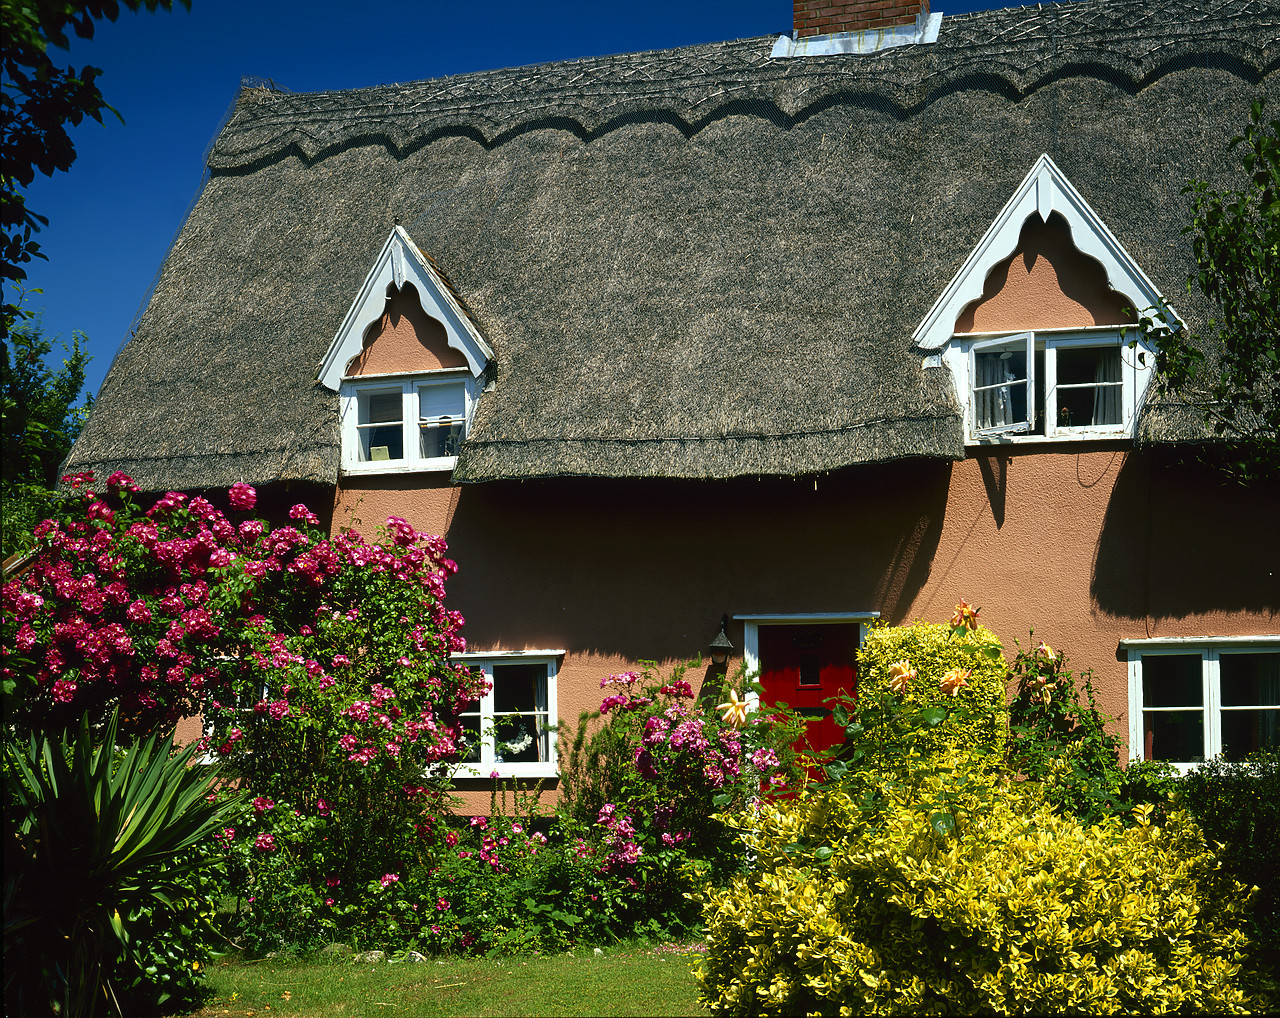 #030131-1 - Thatched Cottage & Garden, Redgrave, Suffolk, England